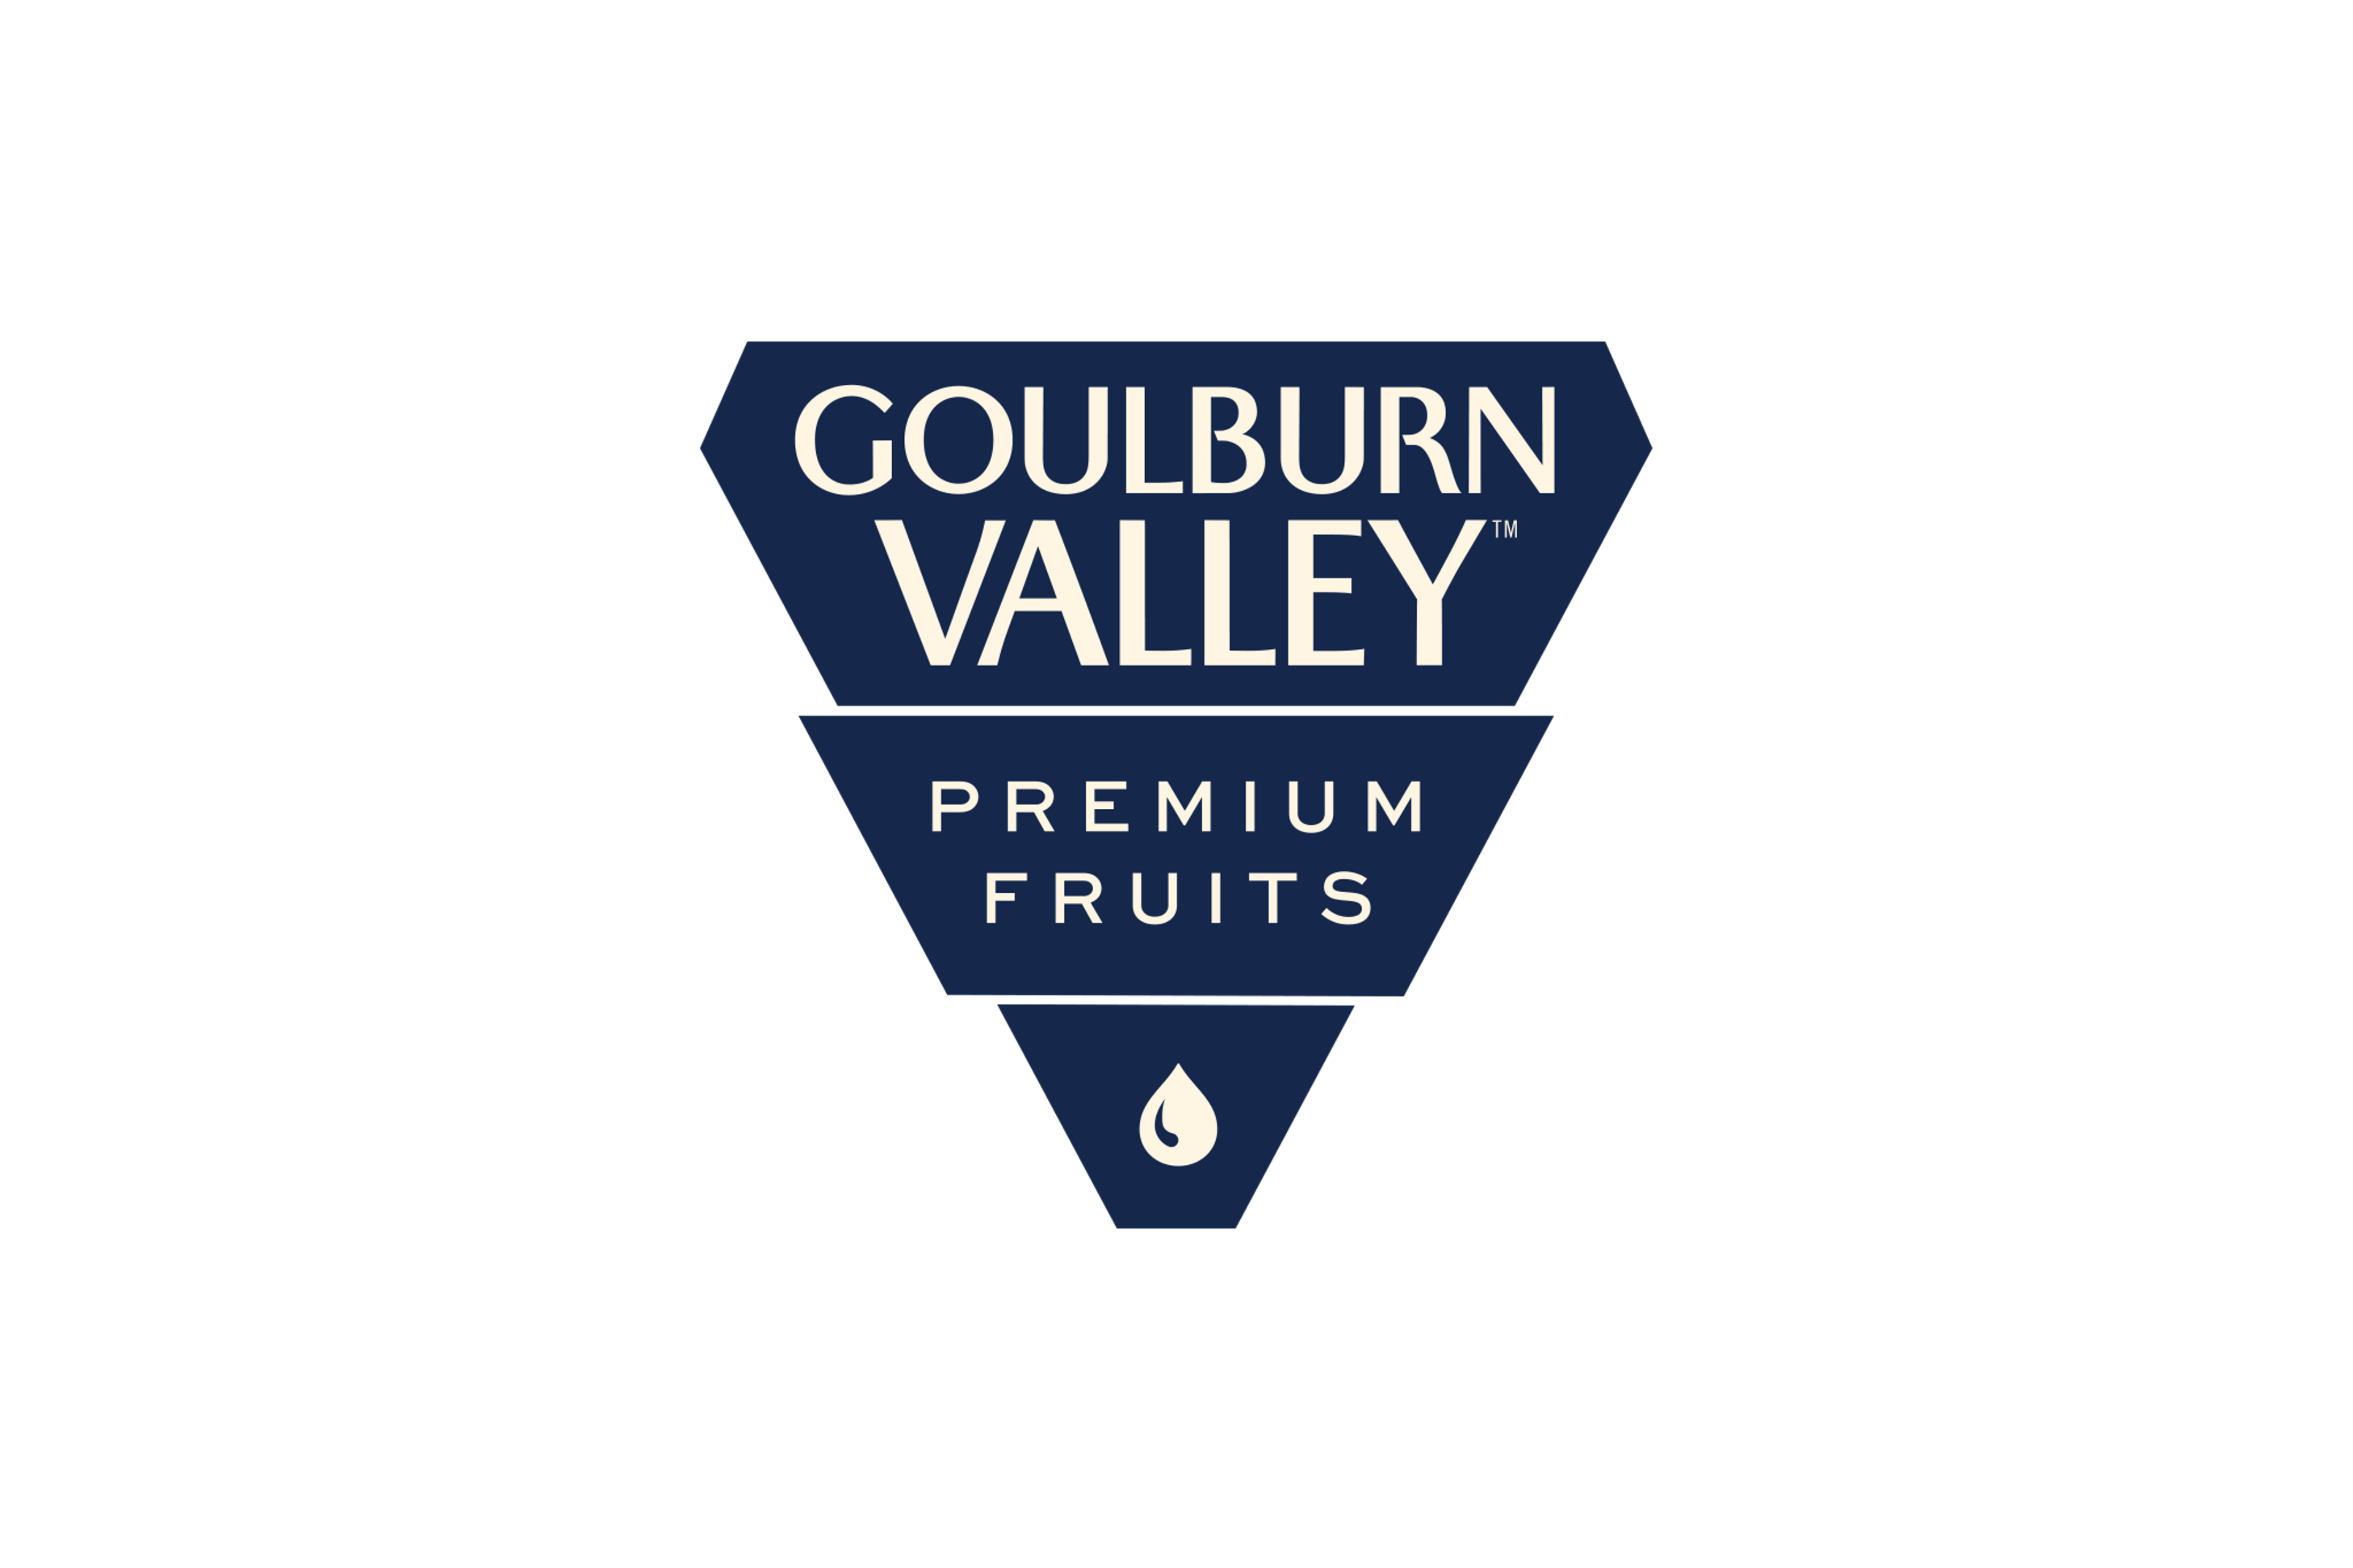 Brand identity design of premium fruits logo for Goulburn Valley rebrand by branding agency Sydney London Our Revolution